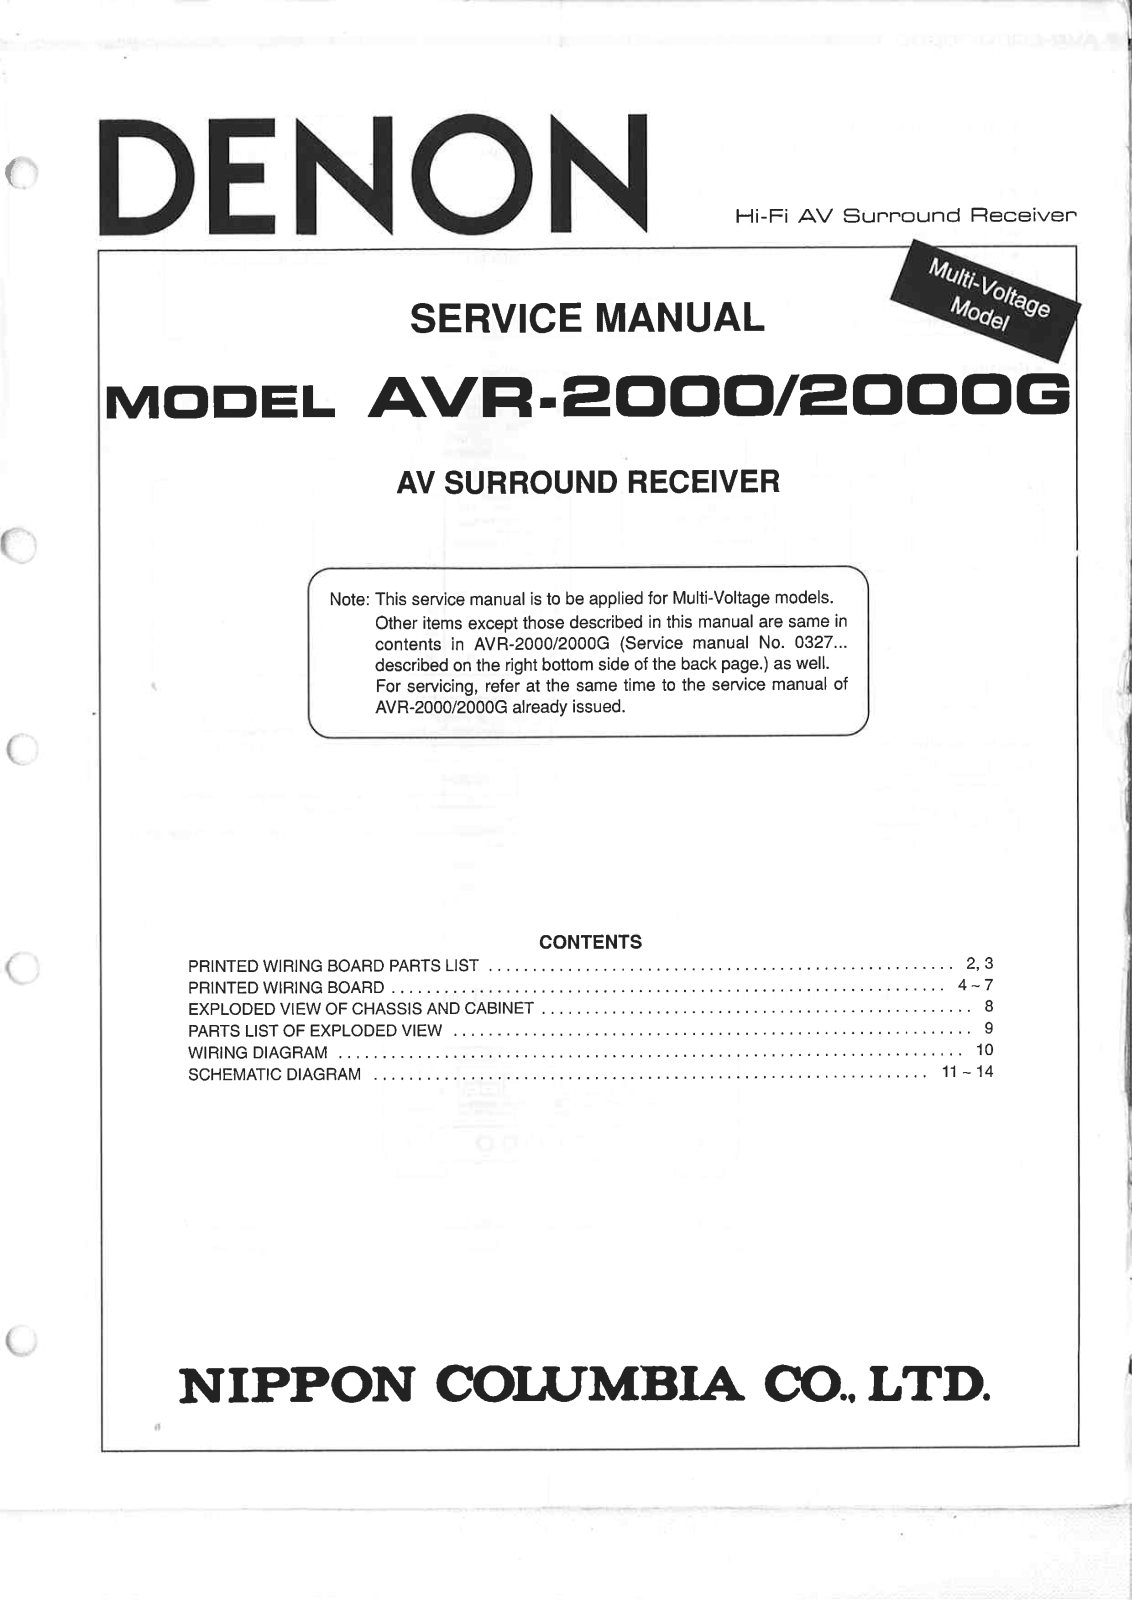 Denon AVR-2000, AVR-2000G Service Manual